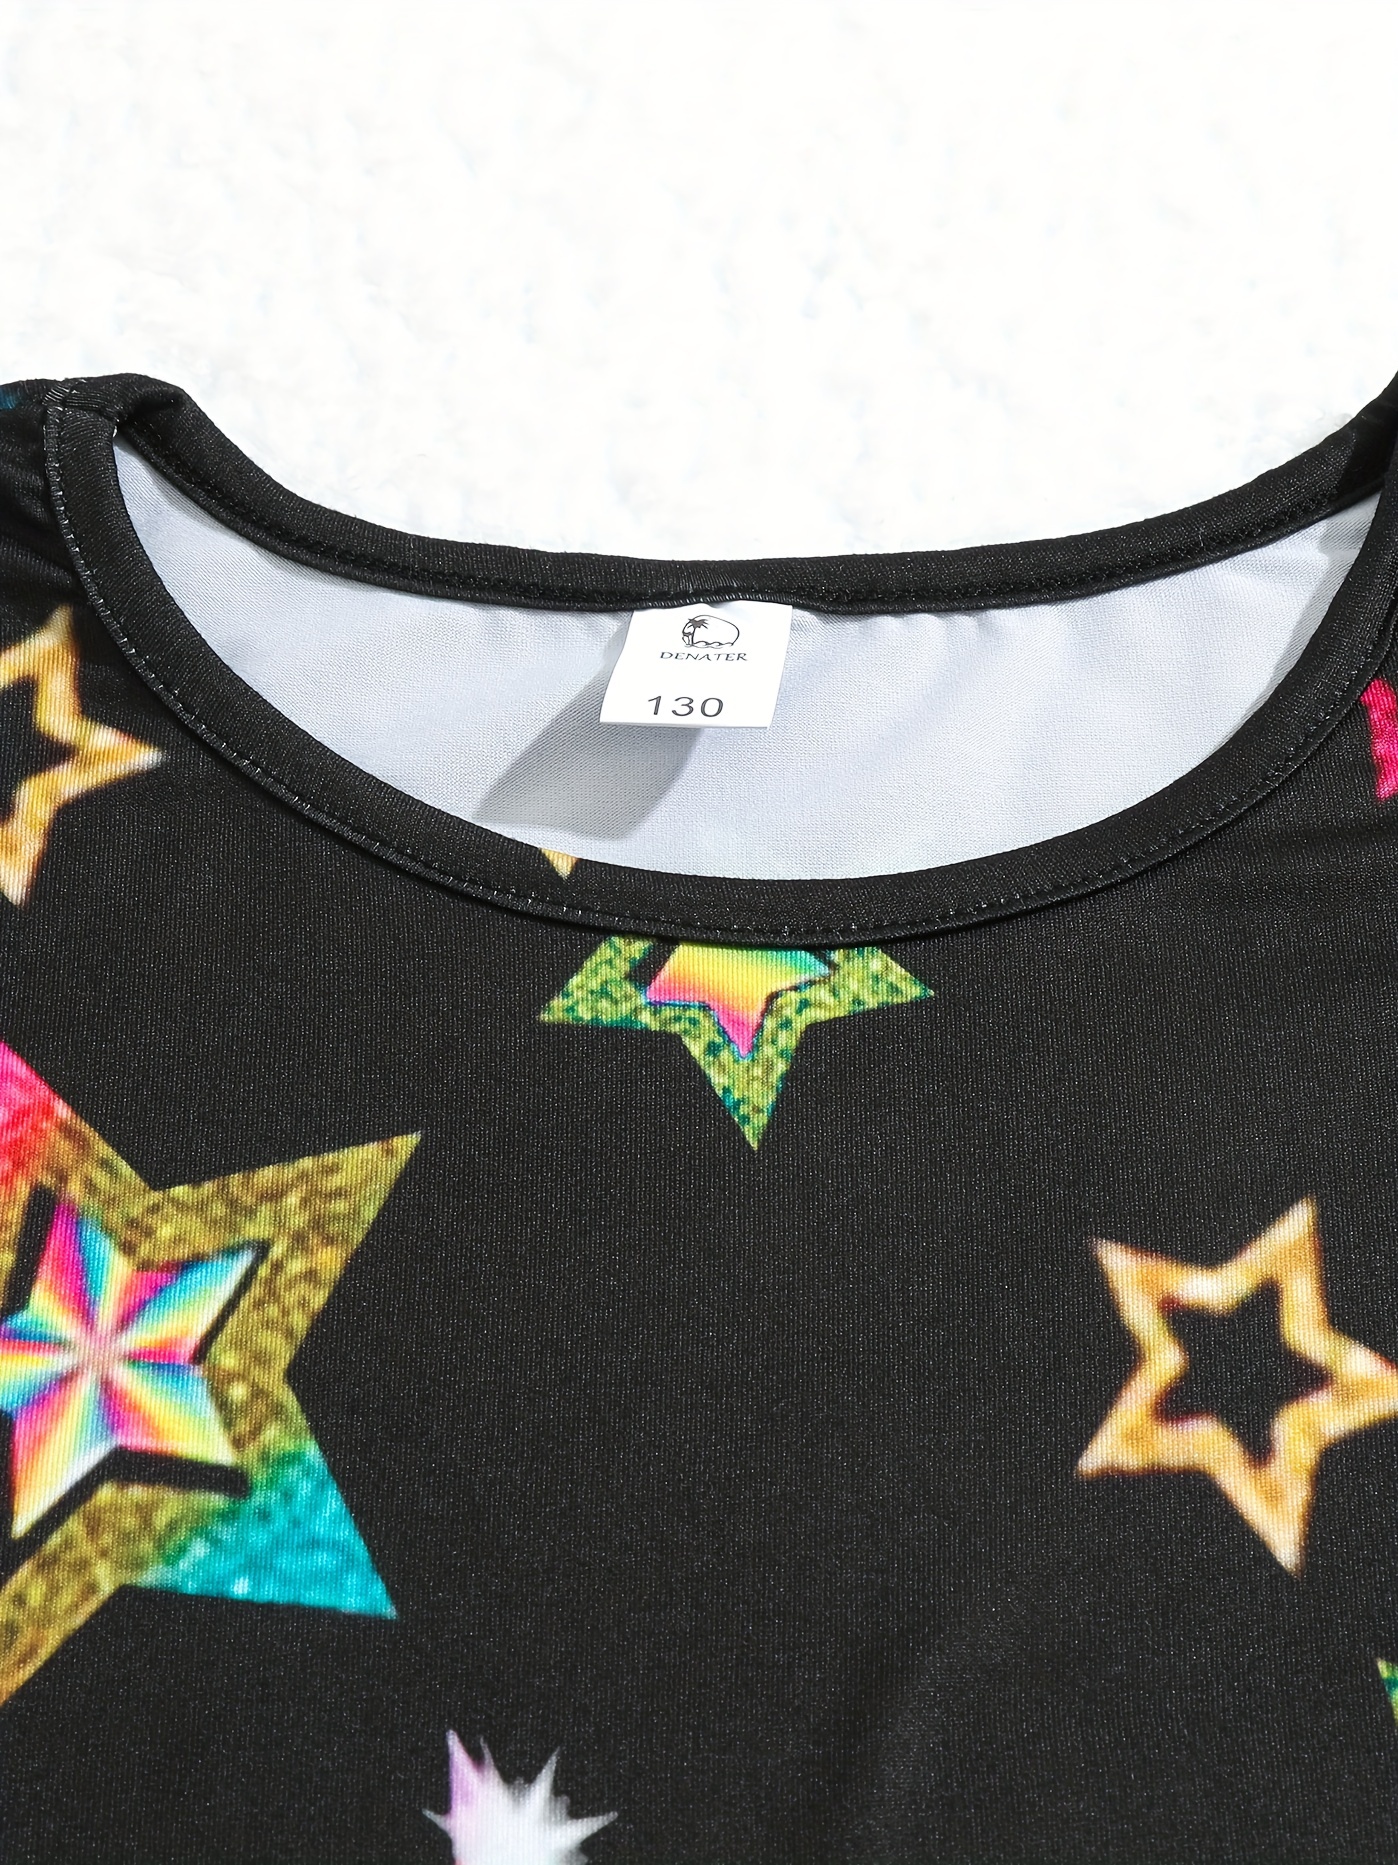 $70 Terez Women's Black Stretch Star-Print Foil Scoop Neckline